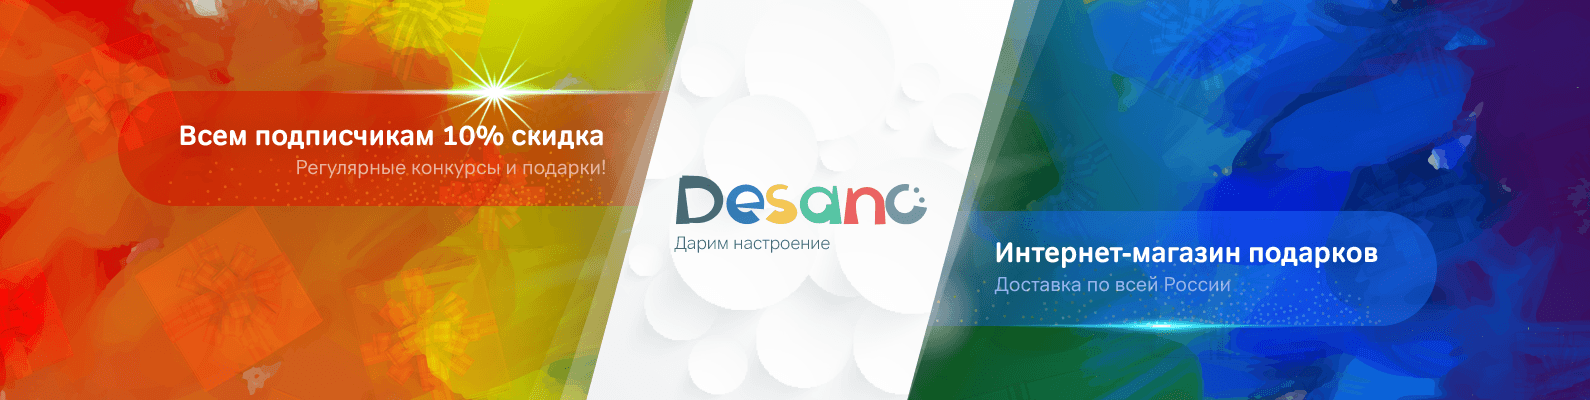 Desano - Vkontakte №2- Header banner